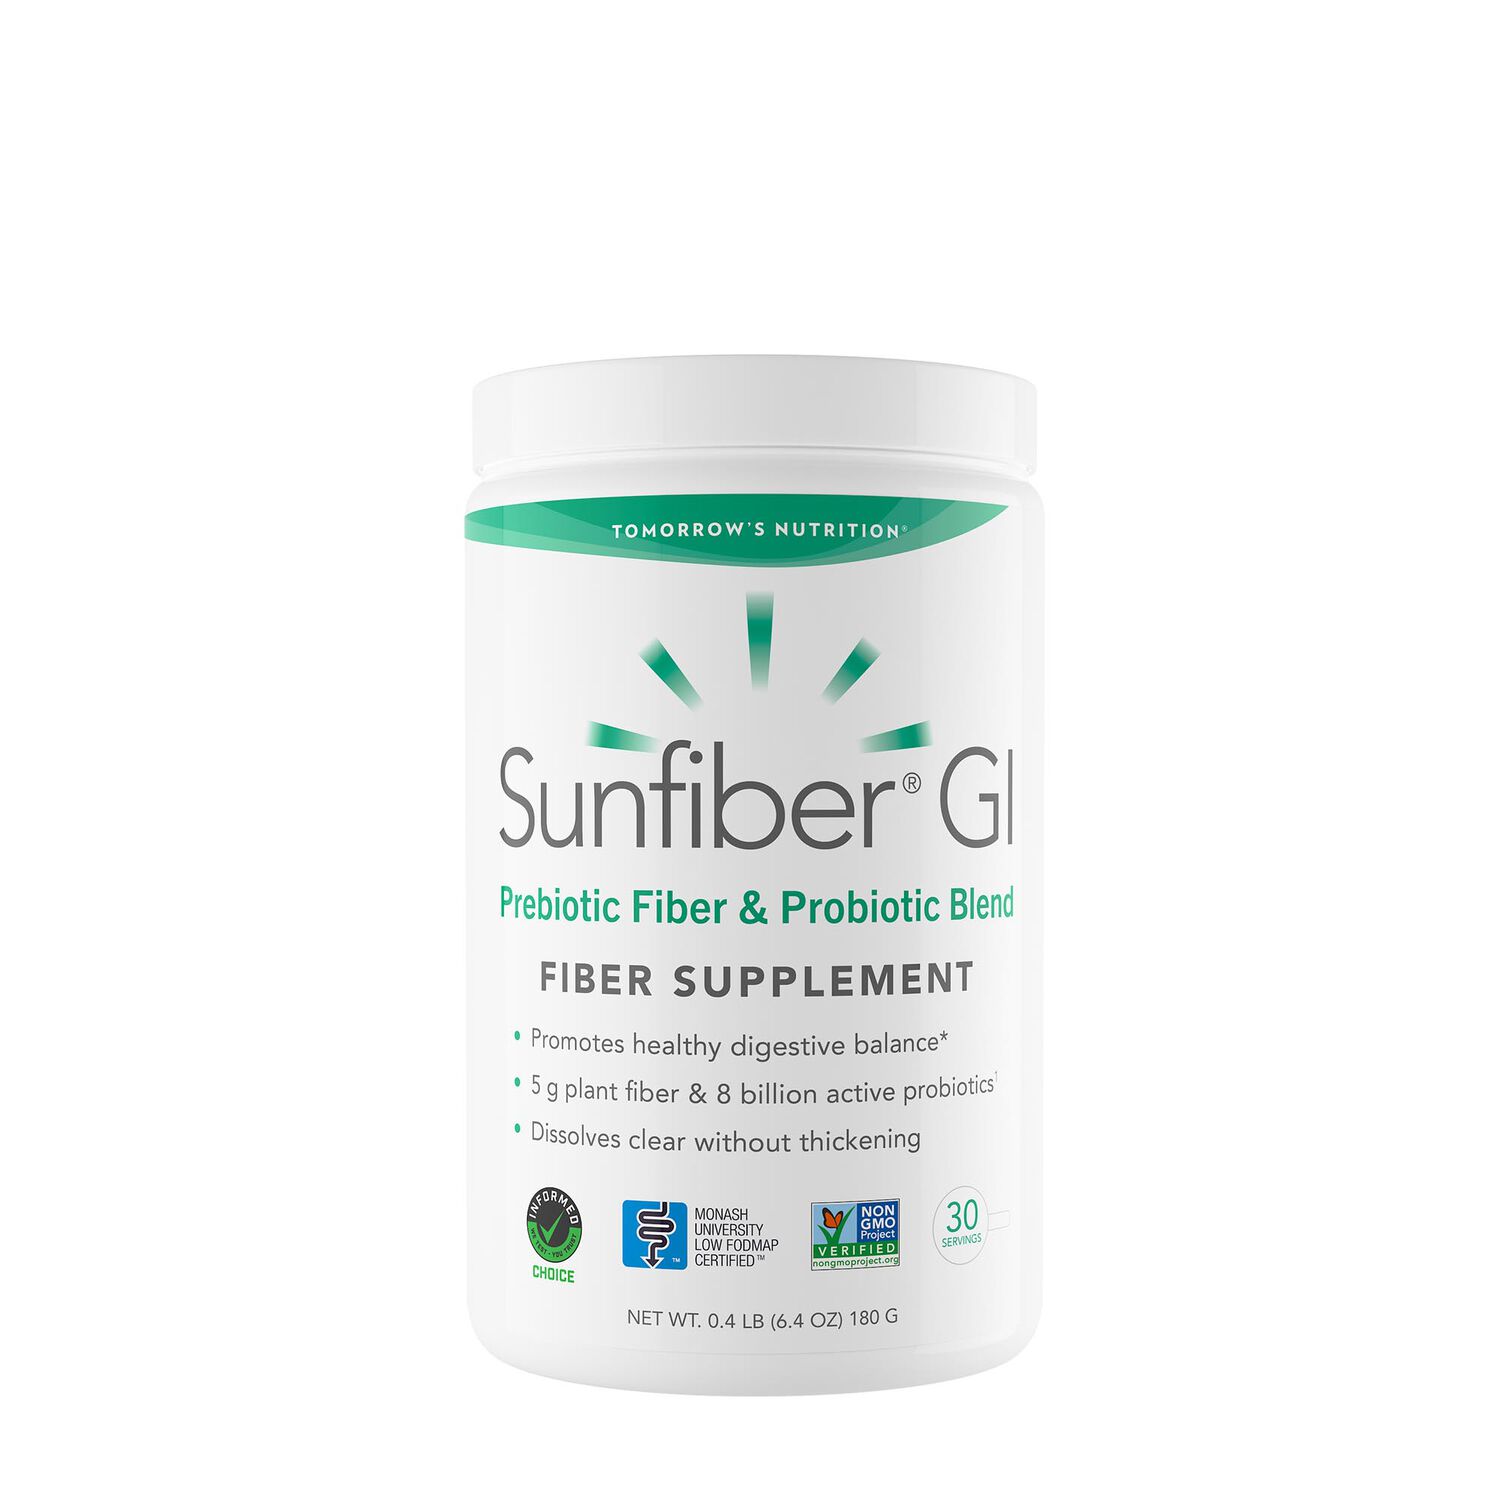 Tomorrow's Nutrition Sunfiber Gi Prebiotic Fiber & Probiotic Blend Healthy - 6.4 Oz. (30 Servings)